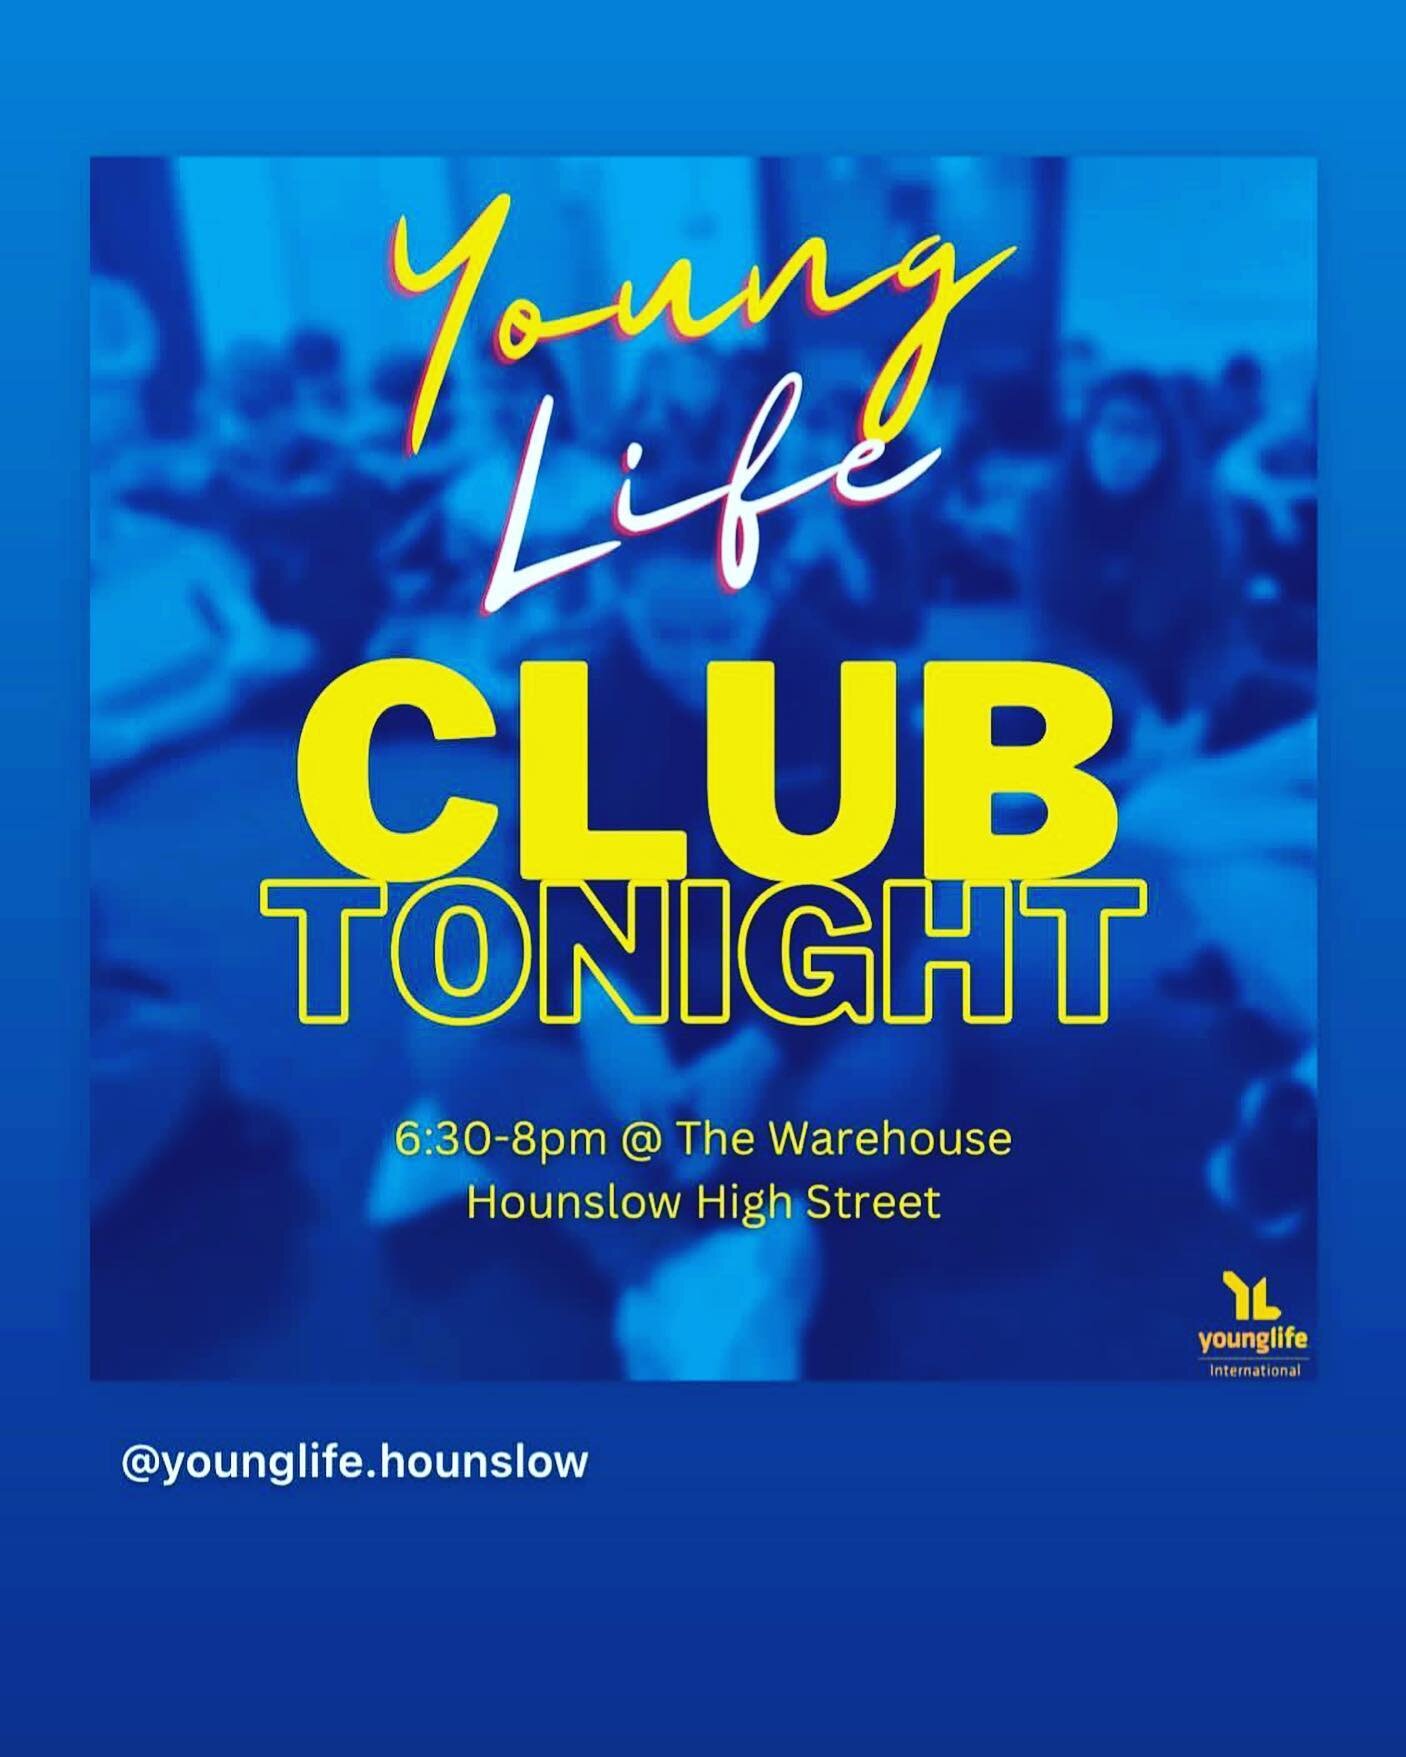 YOUNG LIFE YOUTH JAM
Tonight 6:30pm

#hounslow #heathrow #westlondon #youthwork #londonboroughhounslow 

@hounslowcouncil 
@theartscentrehounslow 
@treatycentre